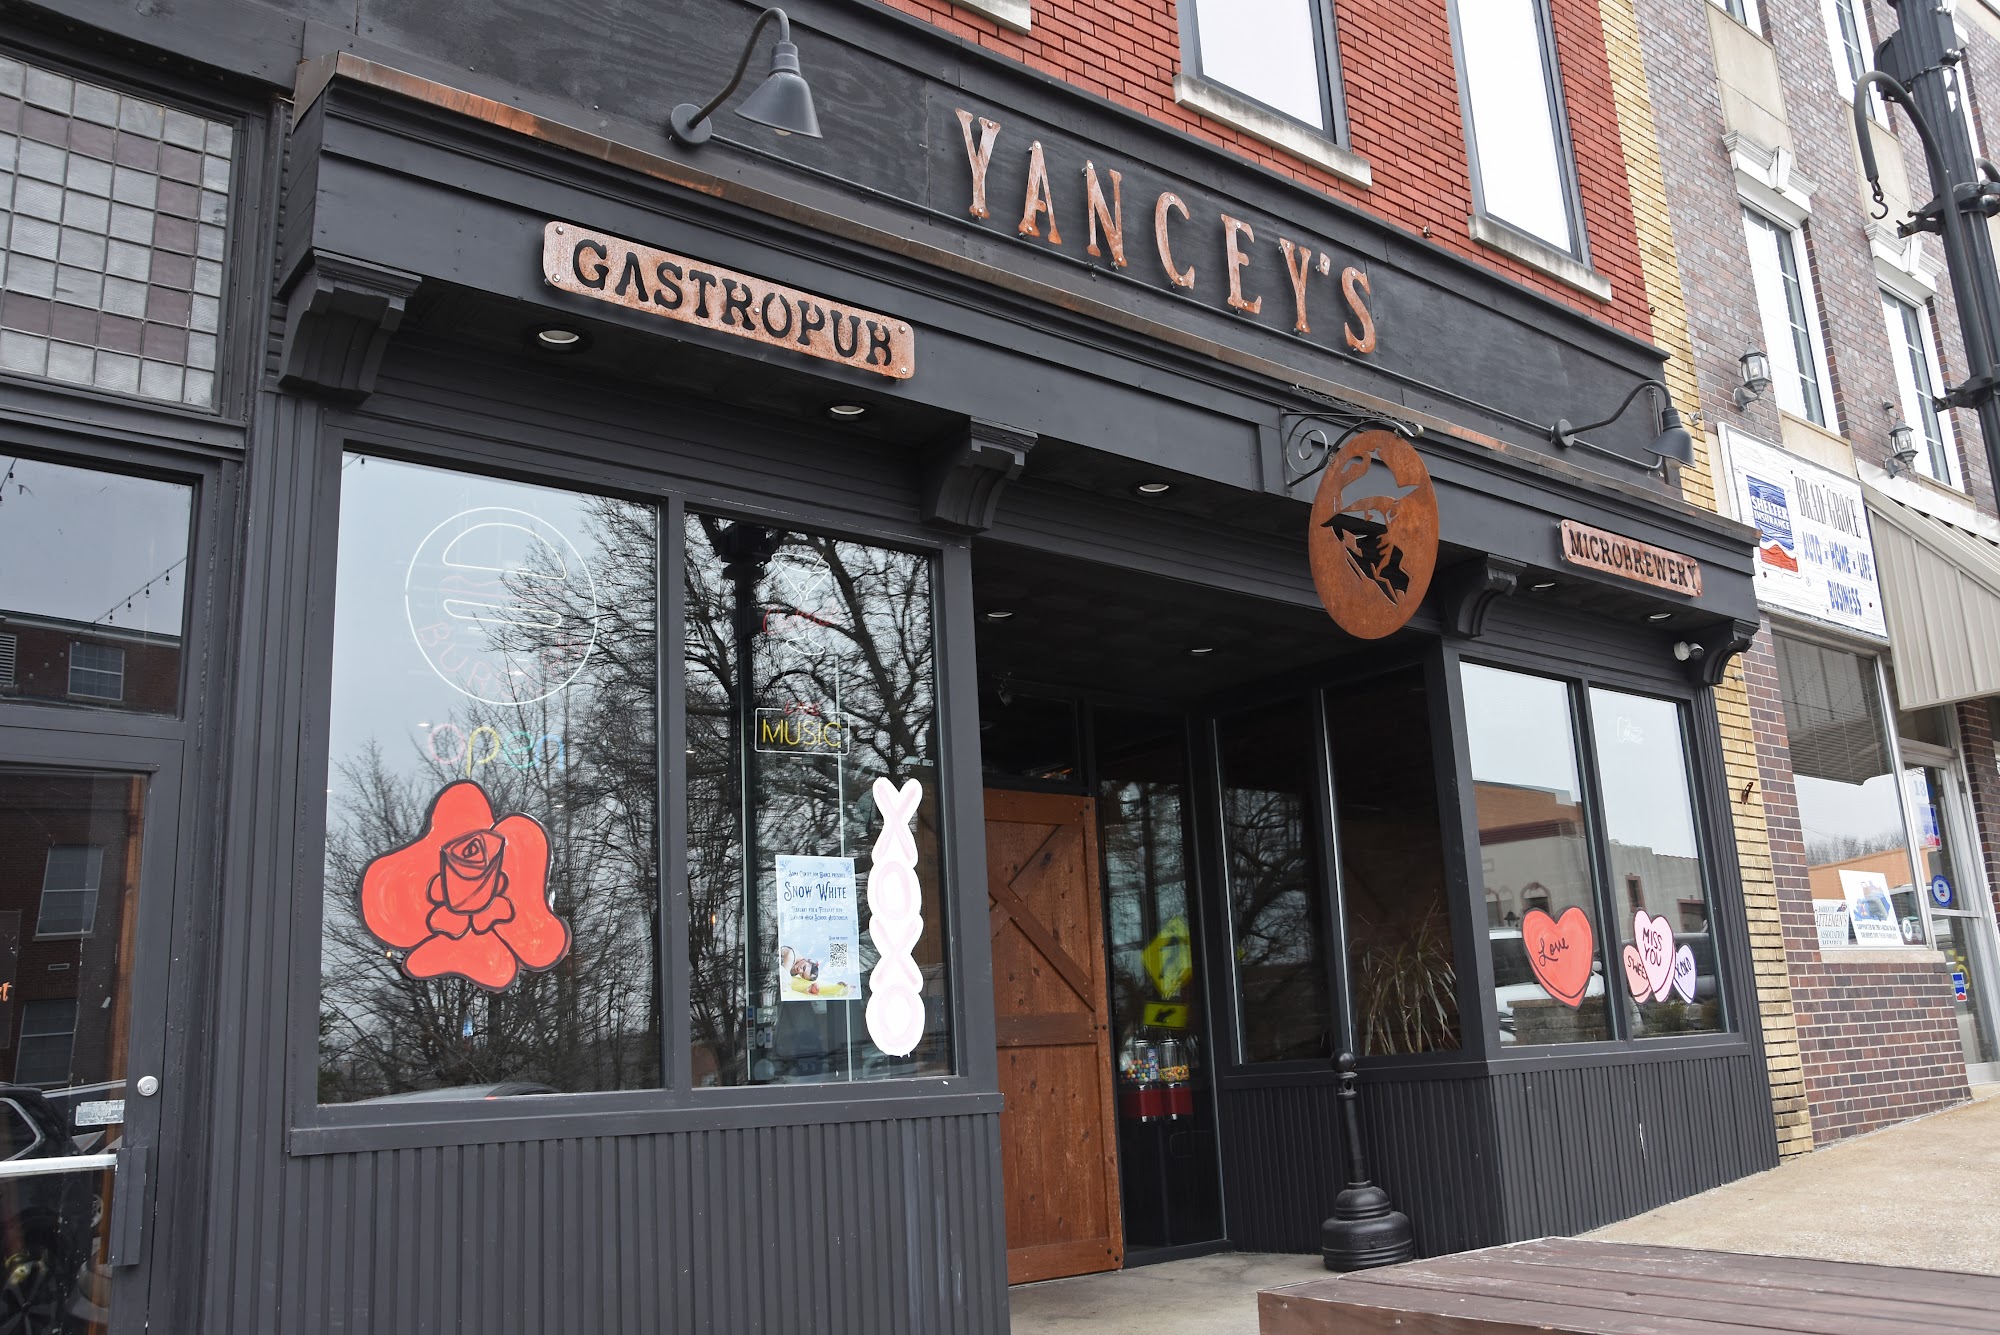 Yancey’s Gastropub and Brewery